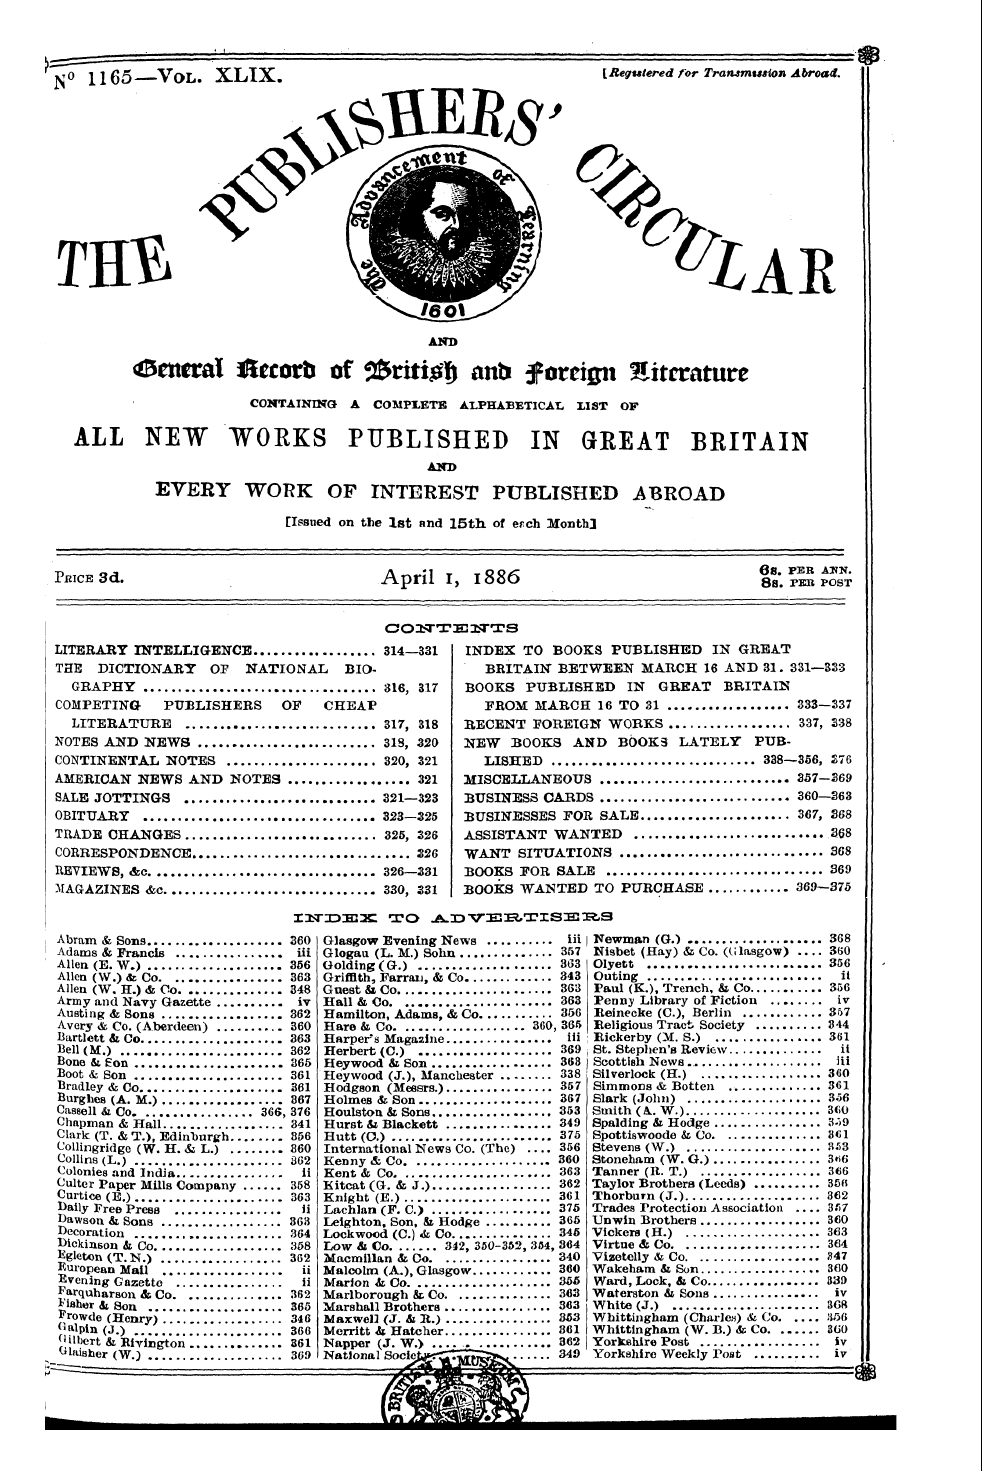 Publishers’ Circular (1880-1890): jS F Y, 1st edition: 3